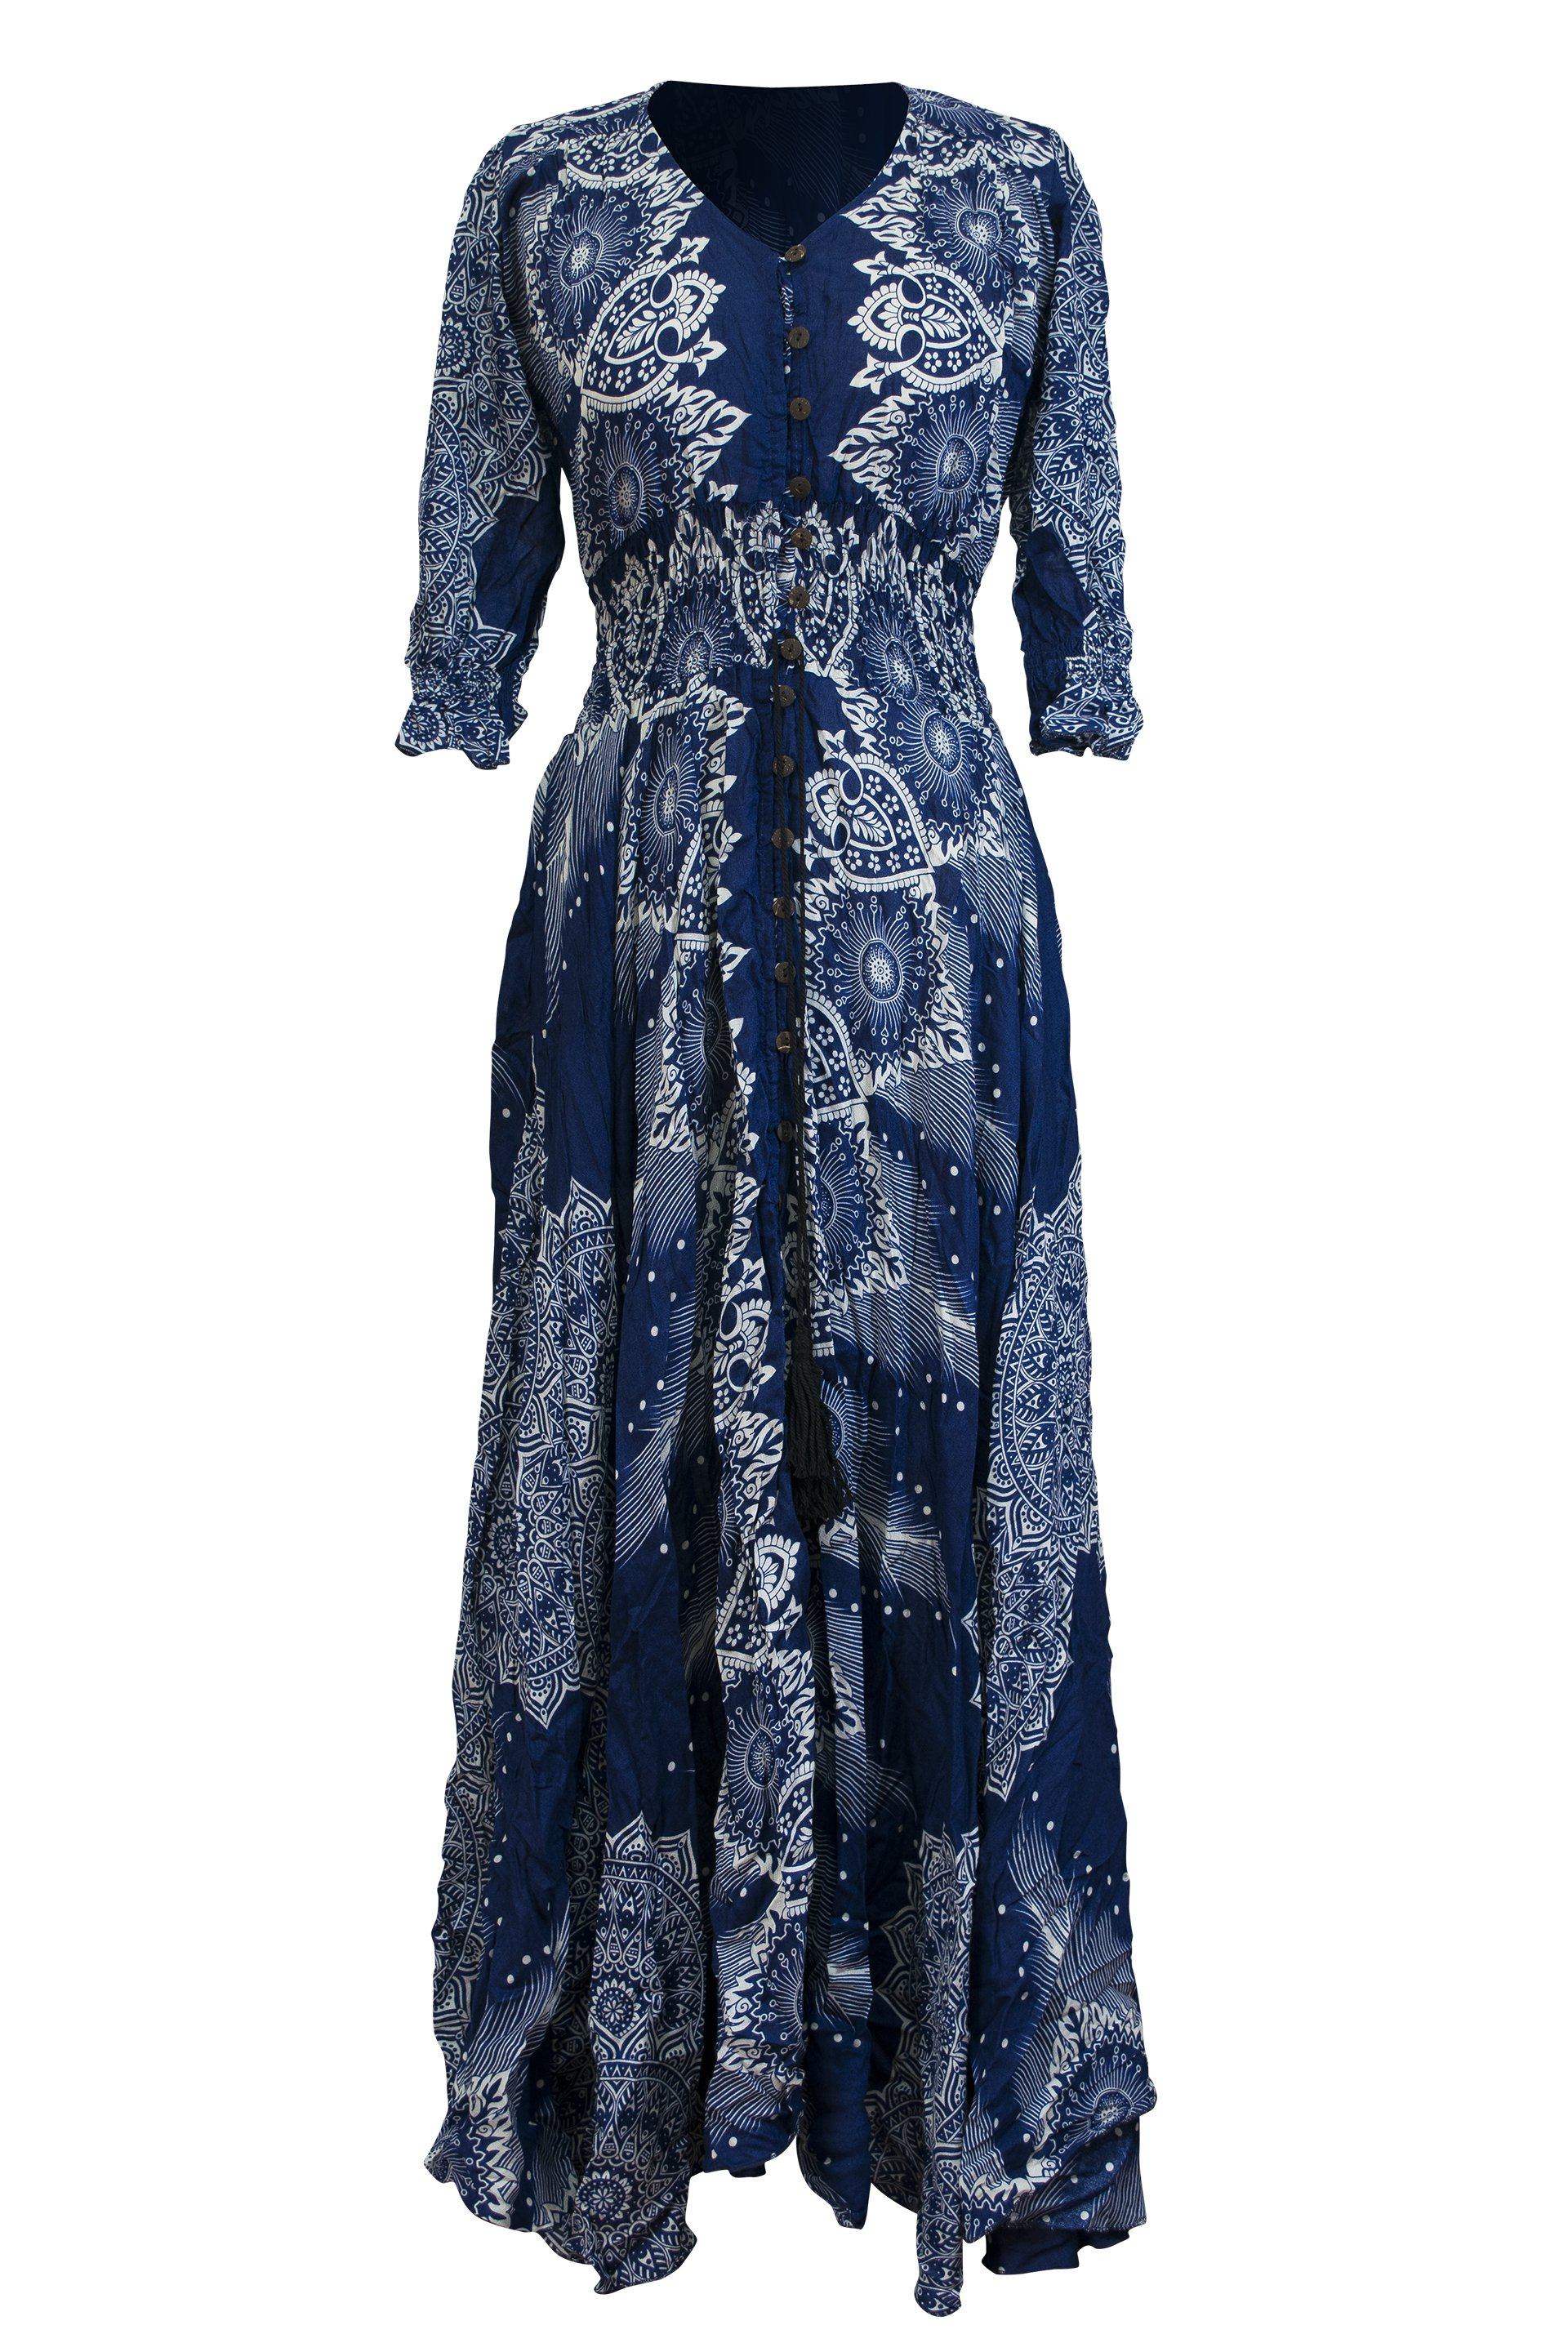 Printed Rayon Dress 3/4 Sleeve Mandala Casual Maxi Dress Beachwear Bohemian - CCCollections